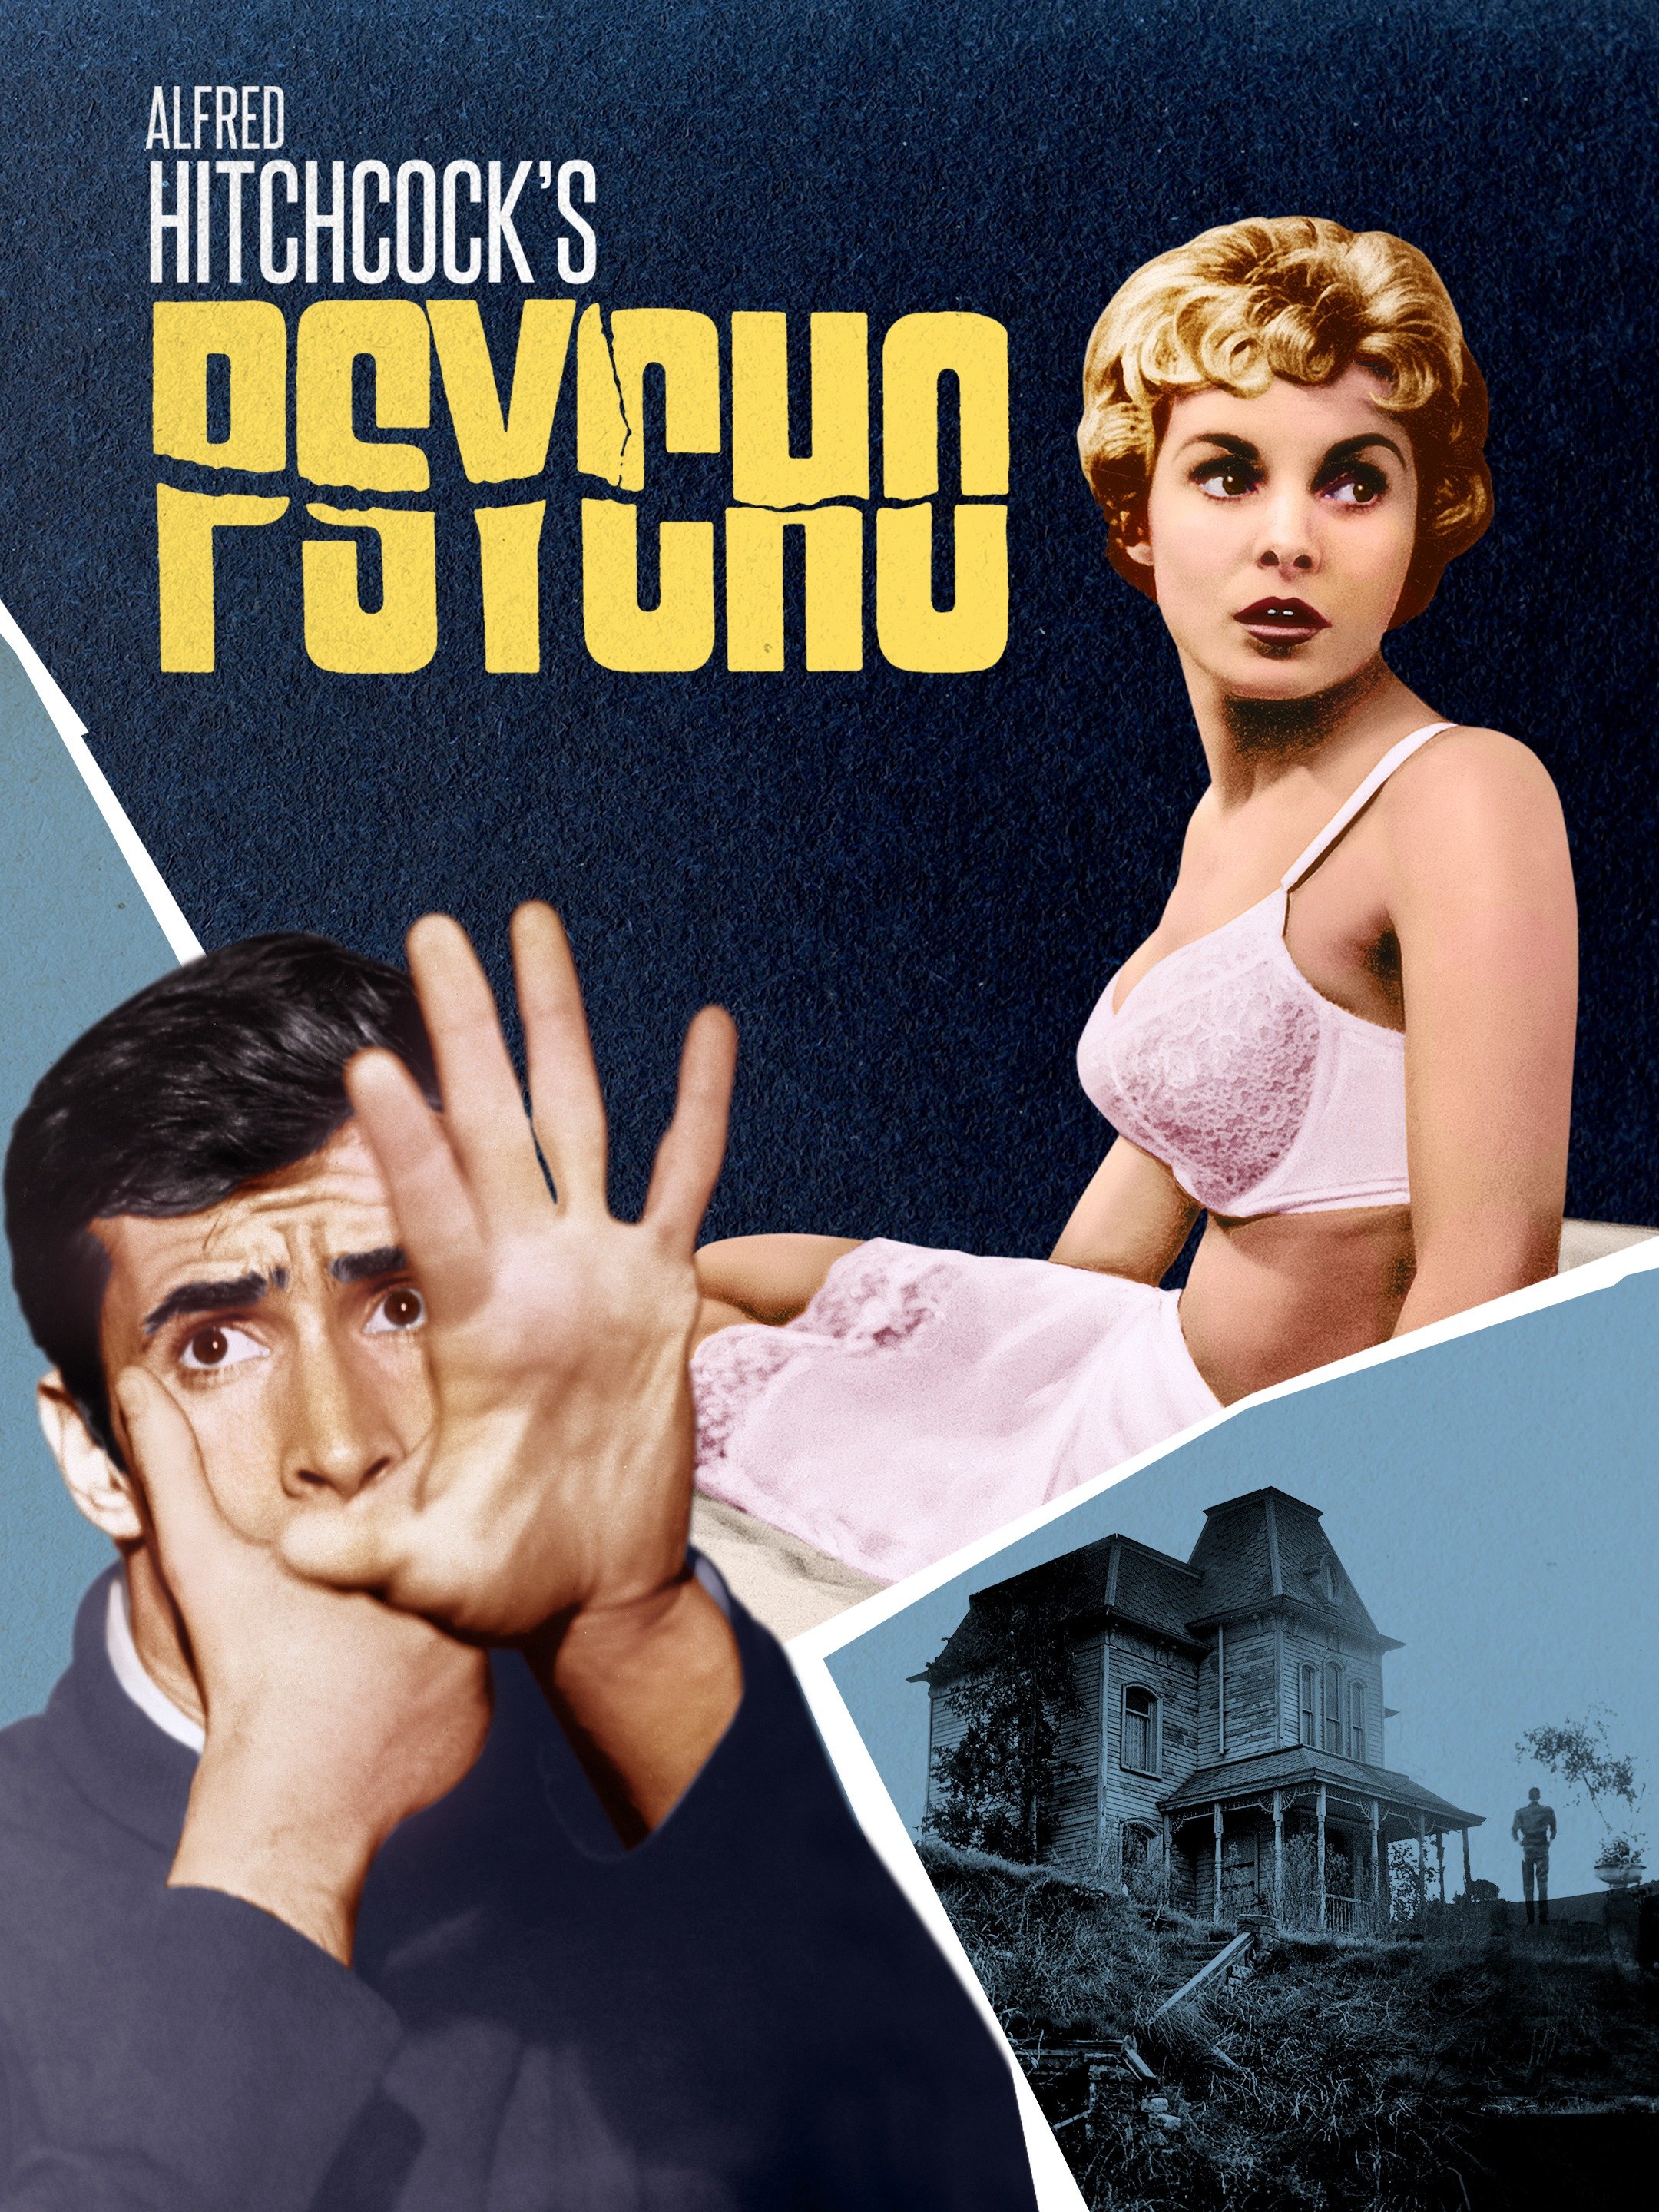 psycho film review essay